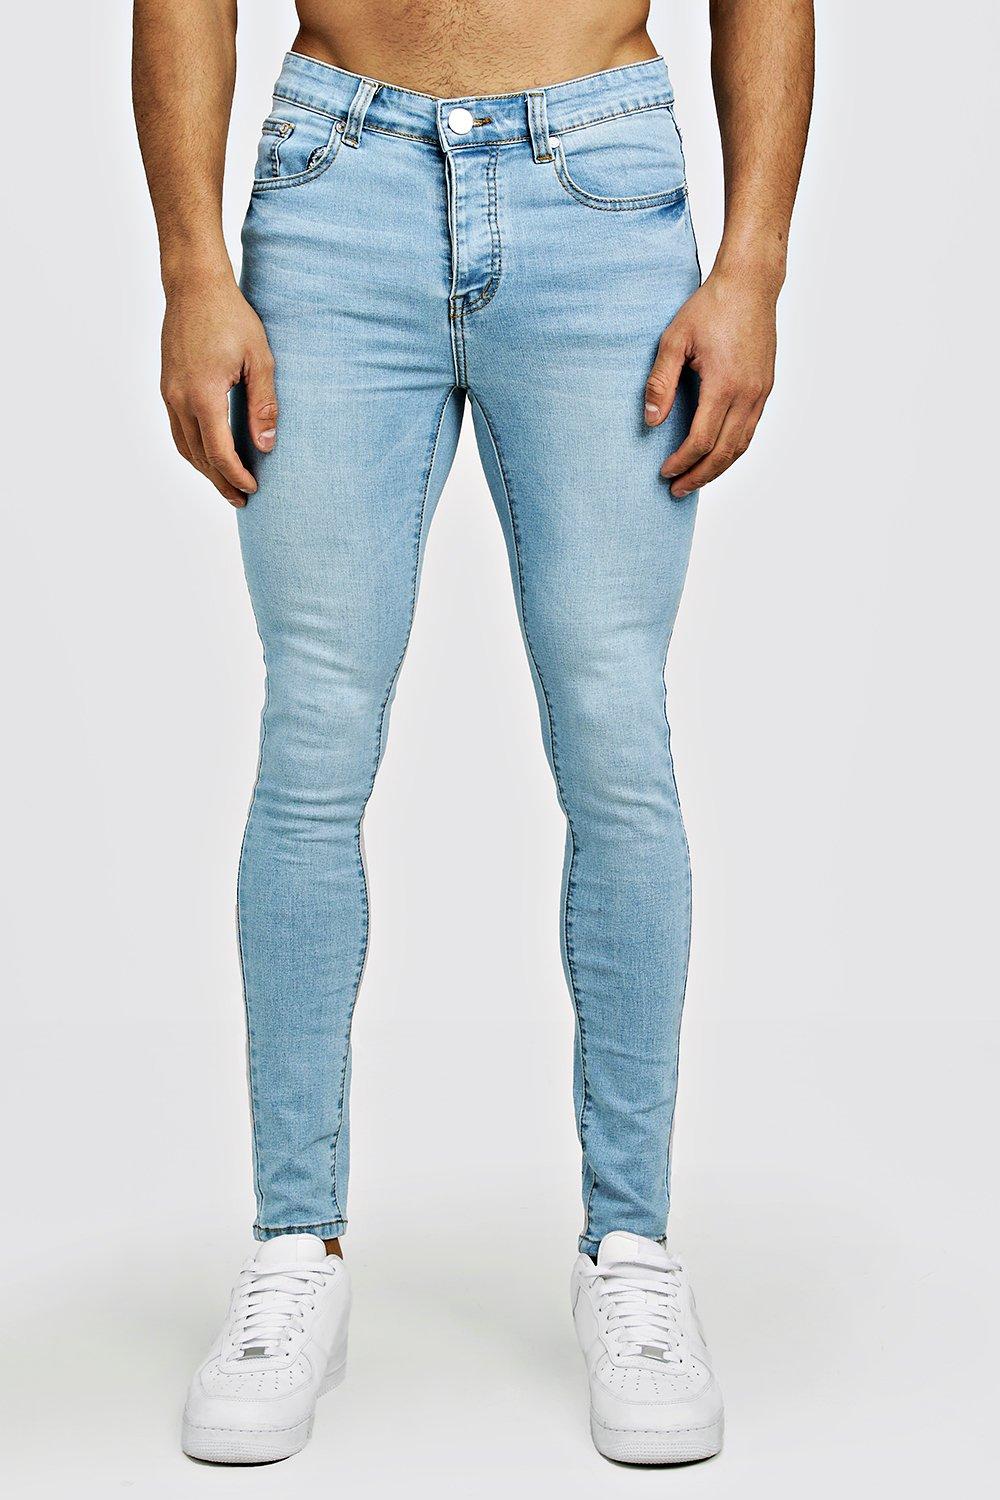 cheap good jeans online